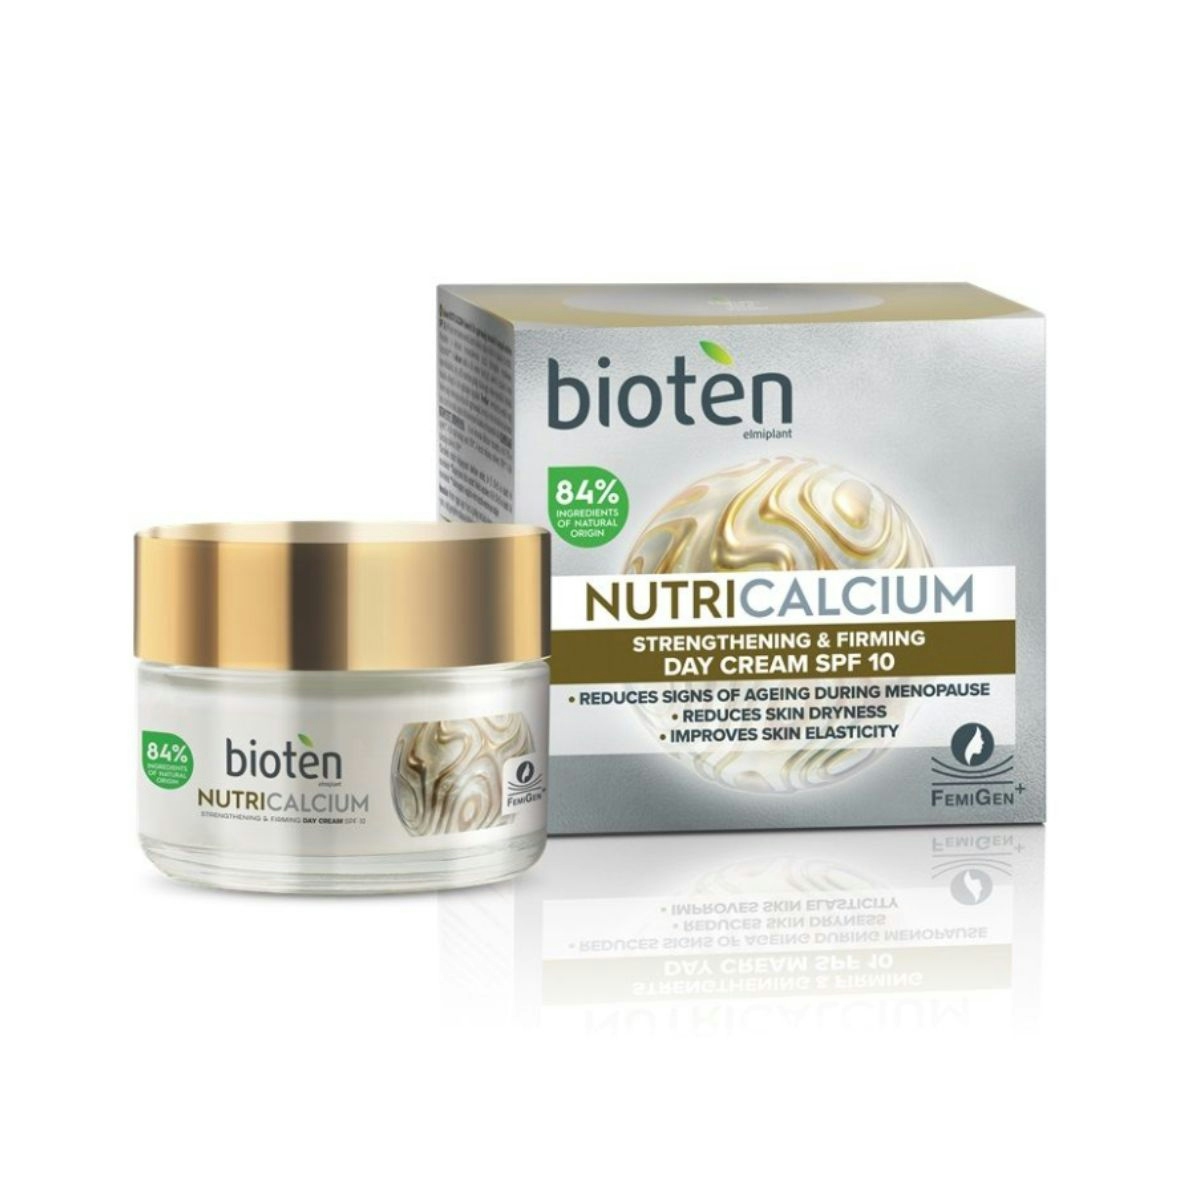 Crema de día nutri calcium spf 10 Bioten 50 ml